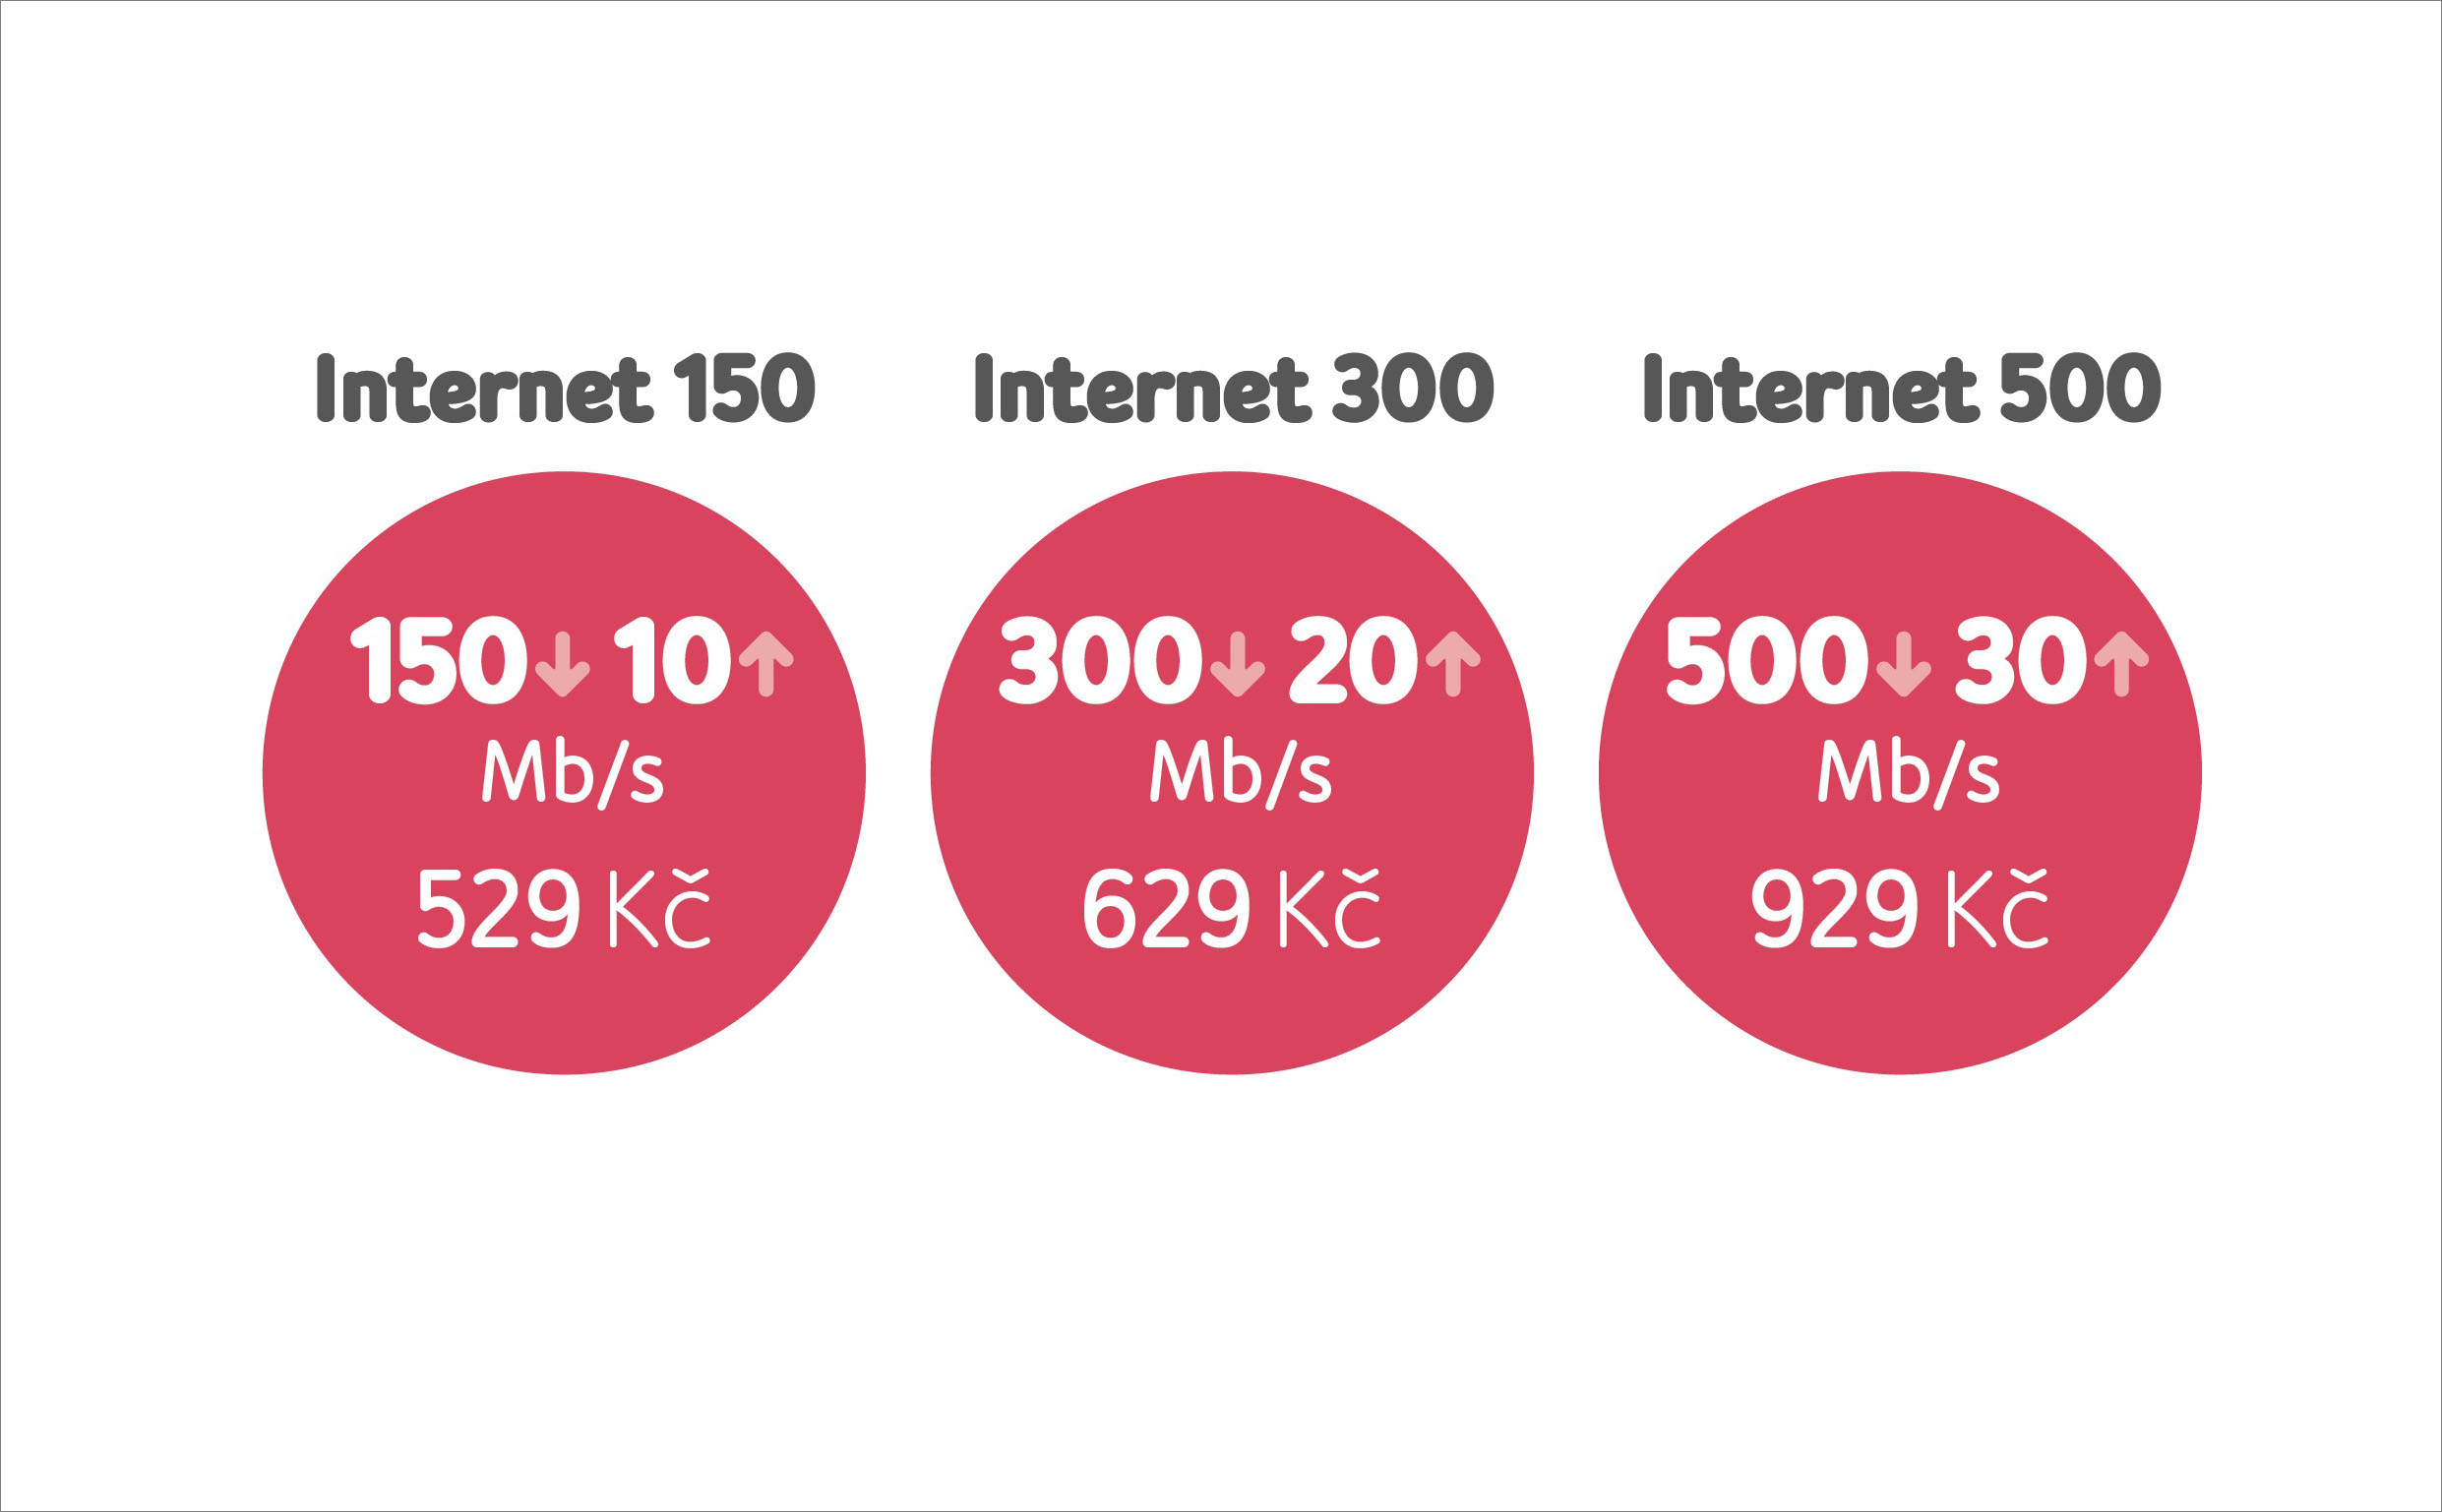 UPC navyšuje rychlost internetu o polovinu